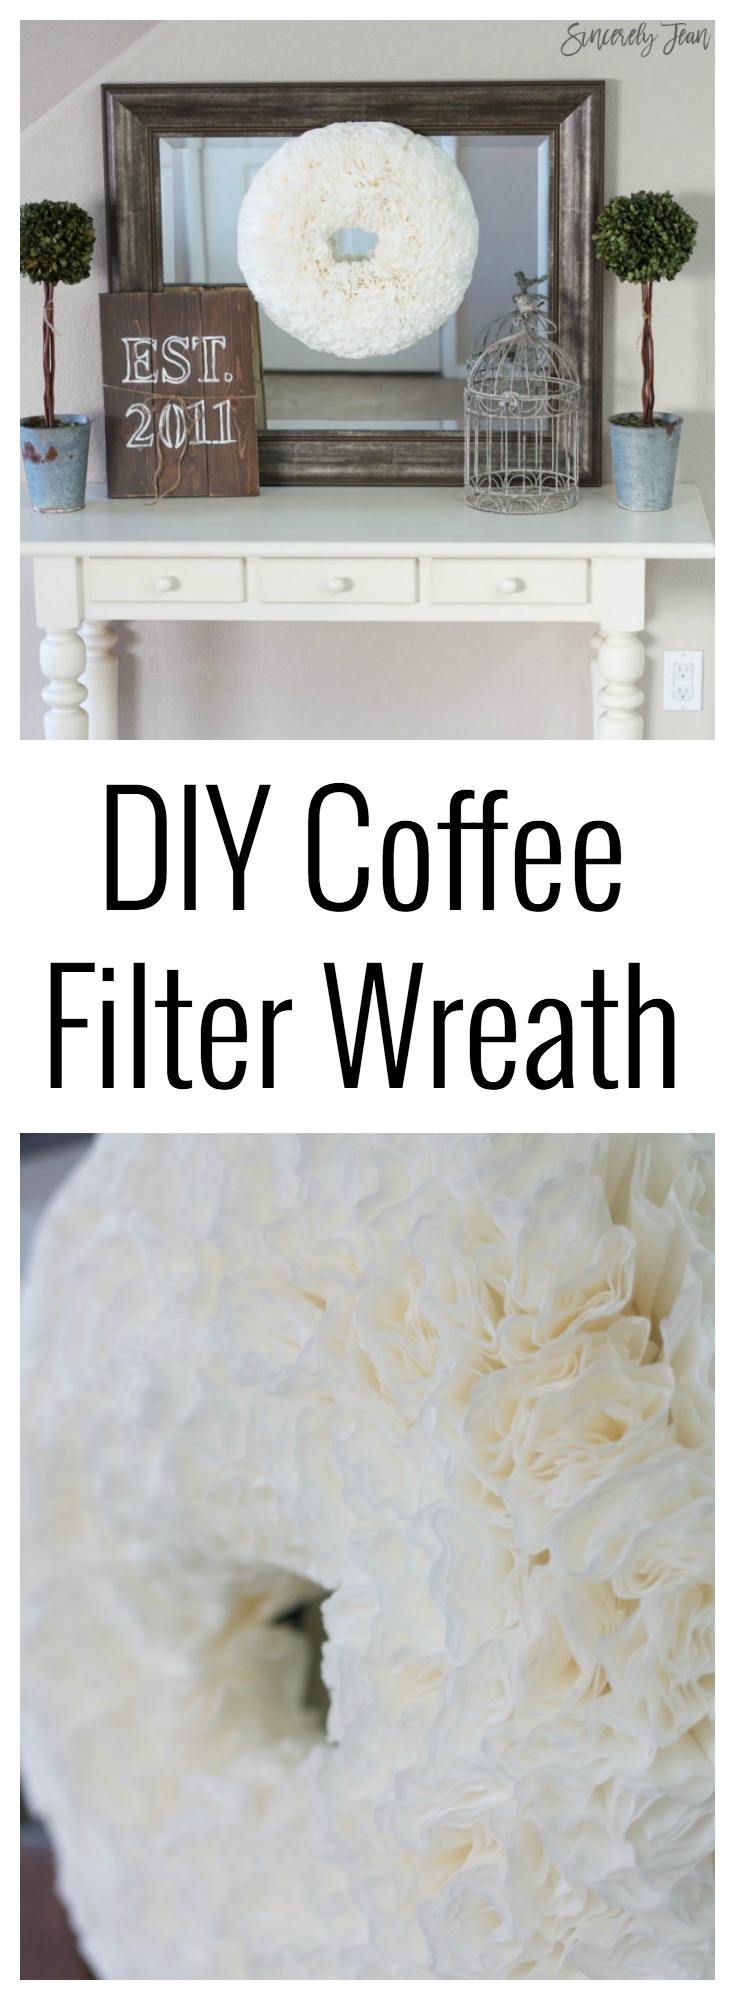 DIY Coffee Filter Wreath simple easy cute spring craft DIY